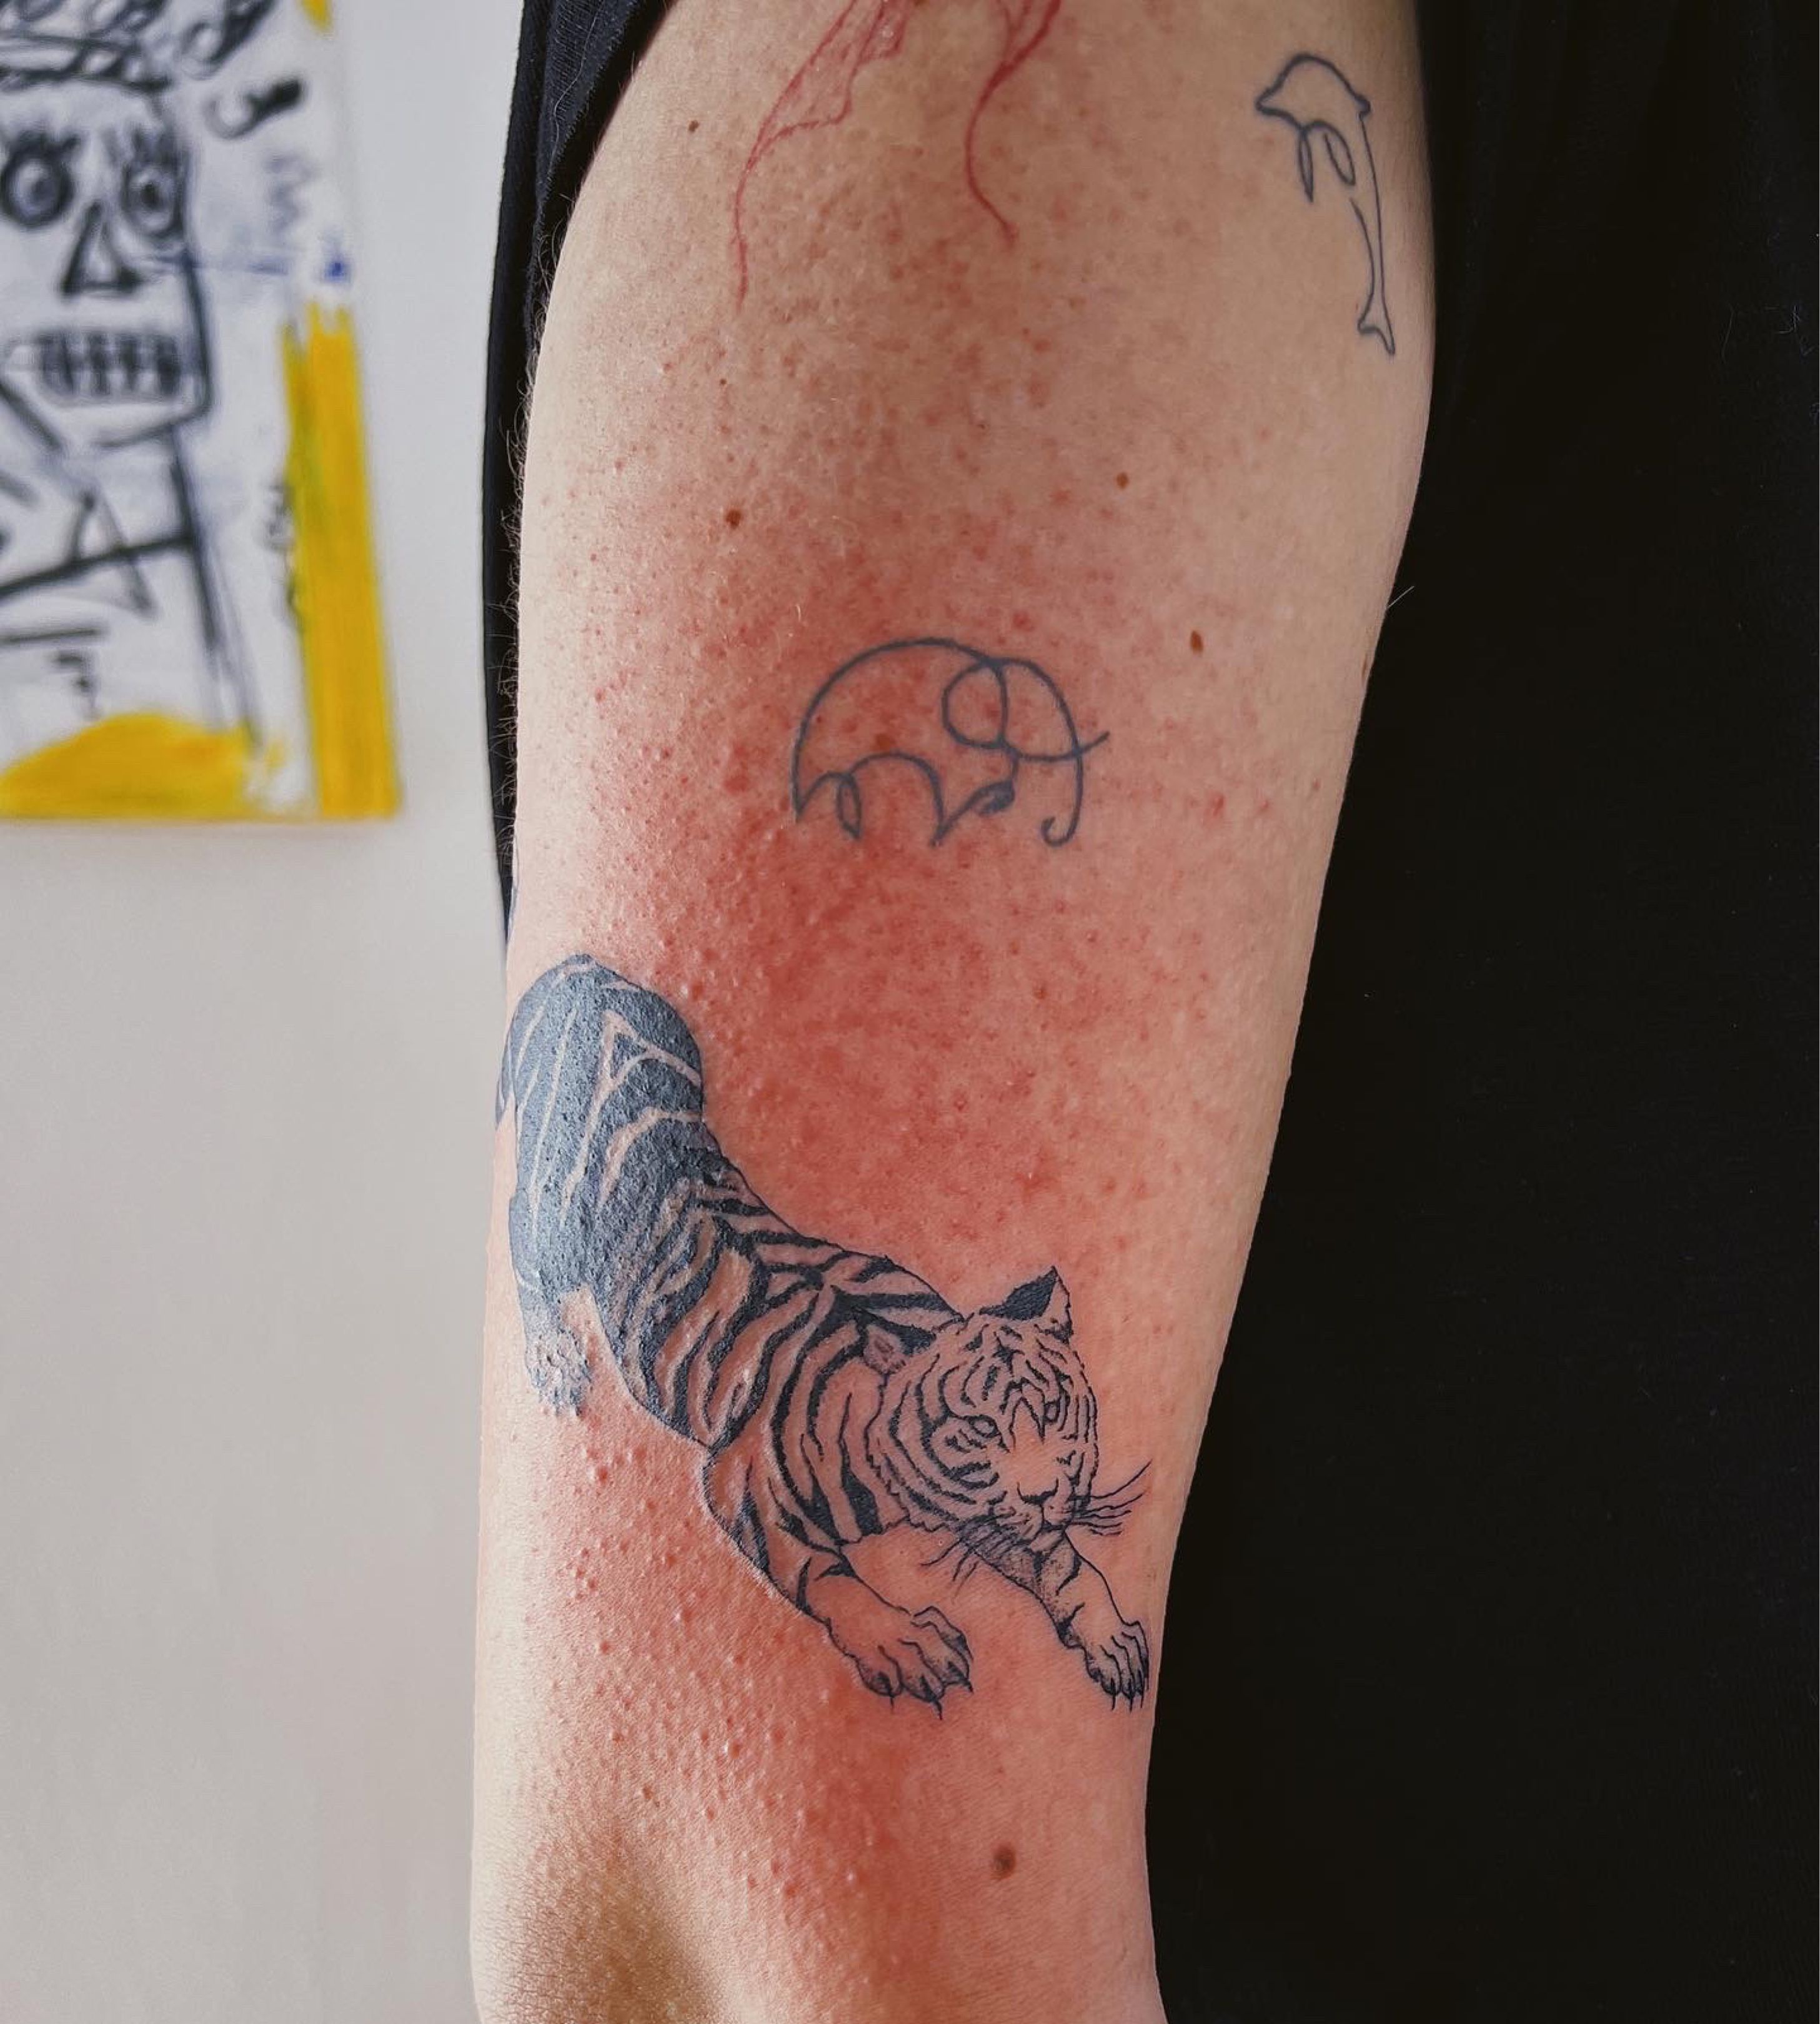 12 Minimalist Tiger Tattoo Ideas That Will Inspire You To Get Inked   PetPress